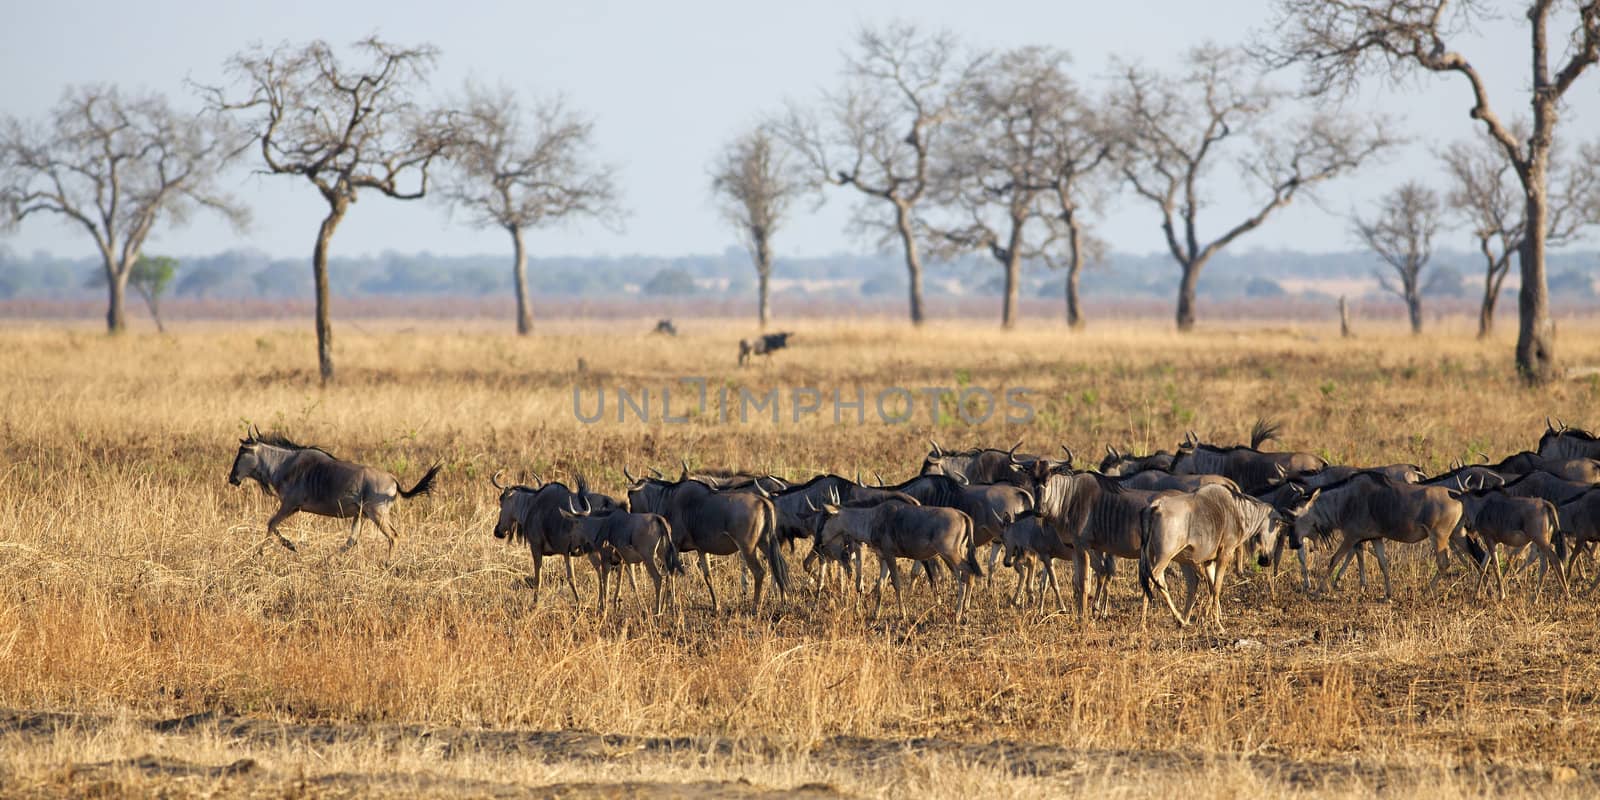 Wildebeest standing in the savannah in Mikumi, Tanzania